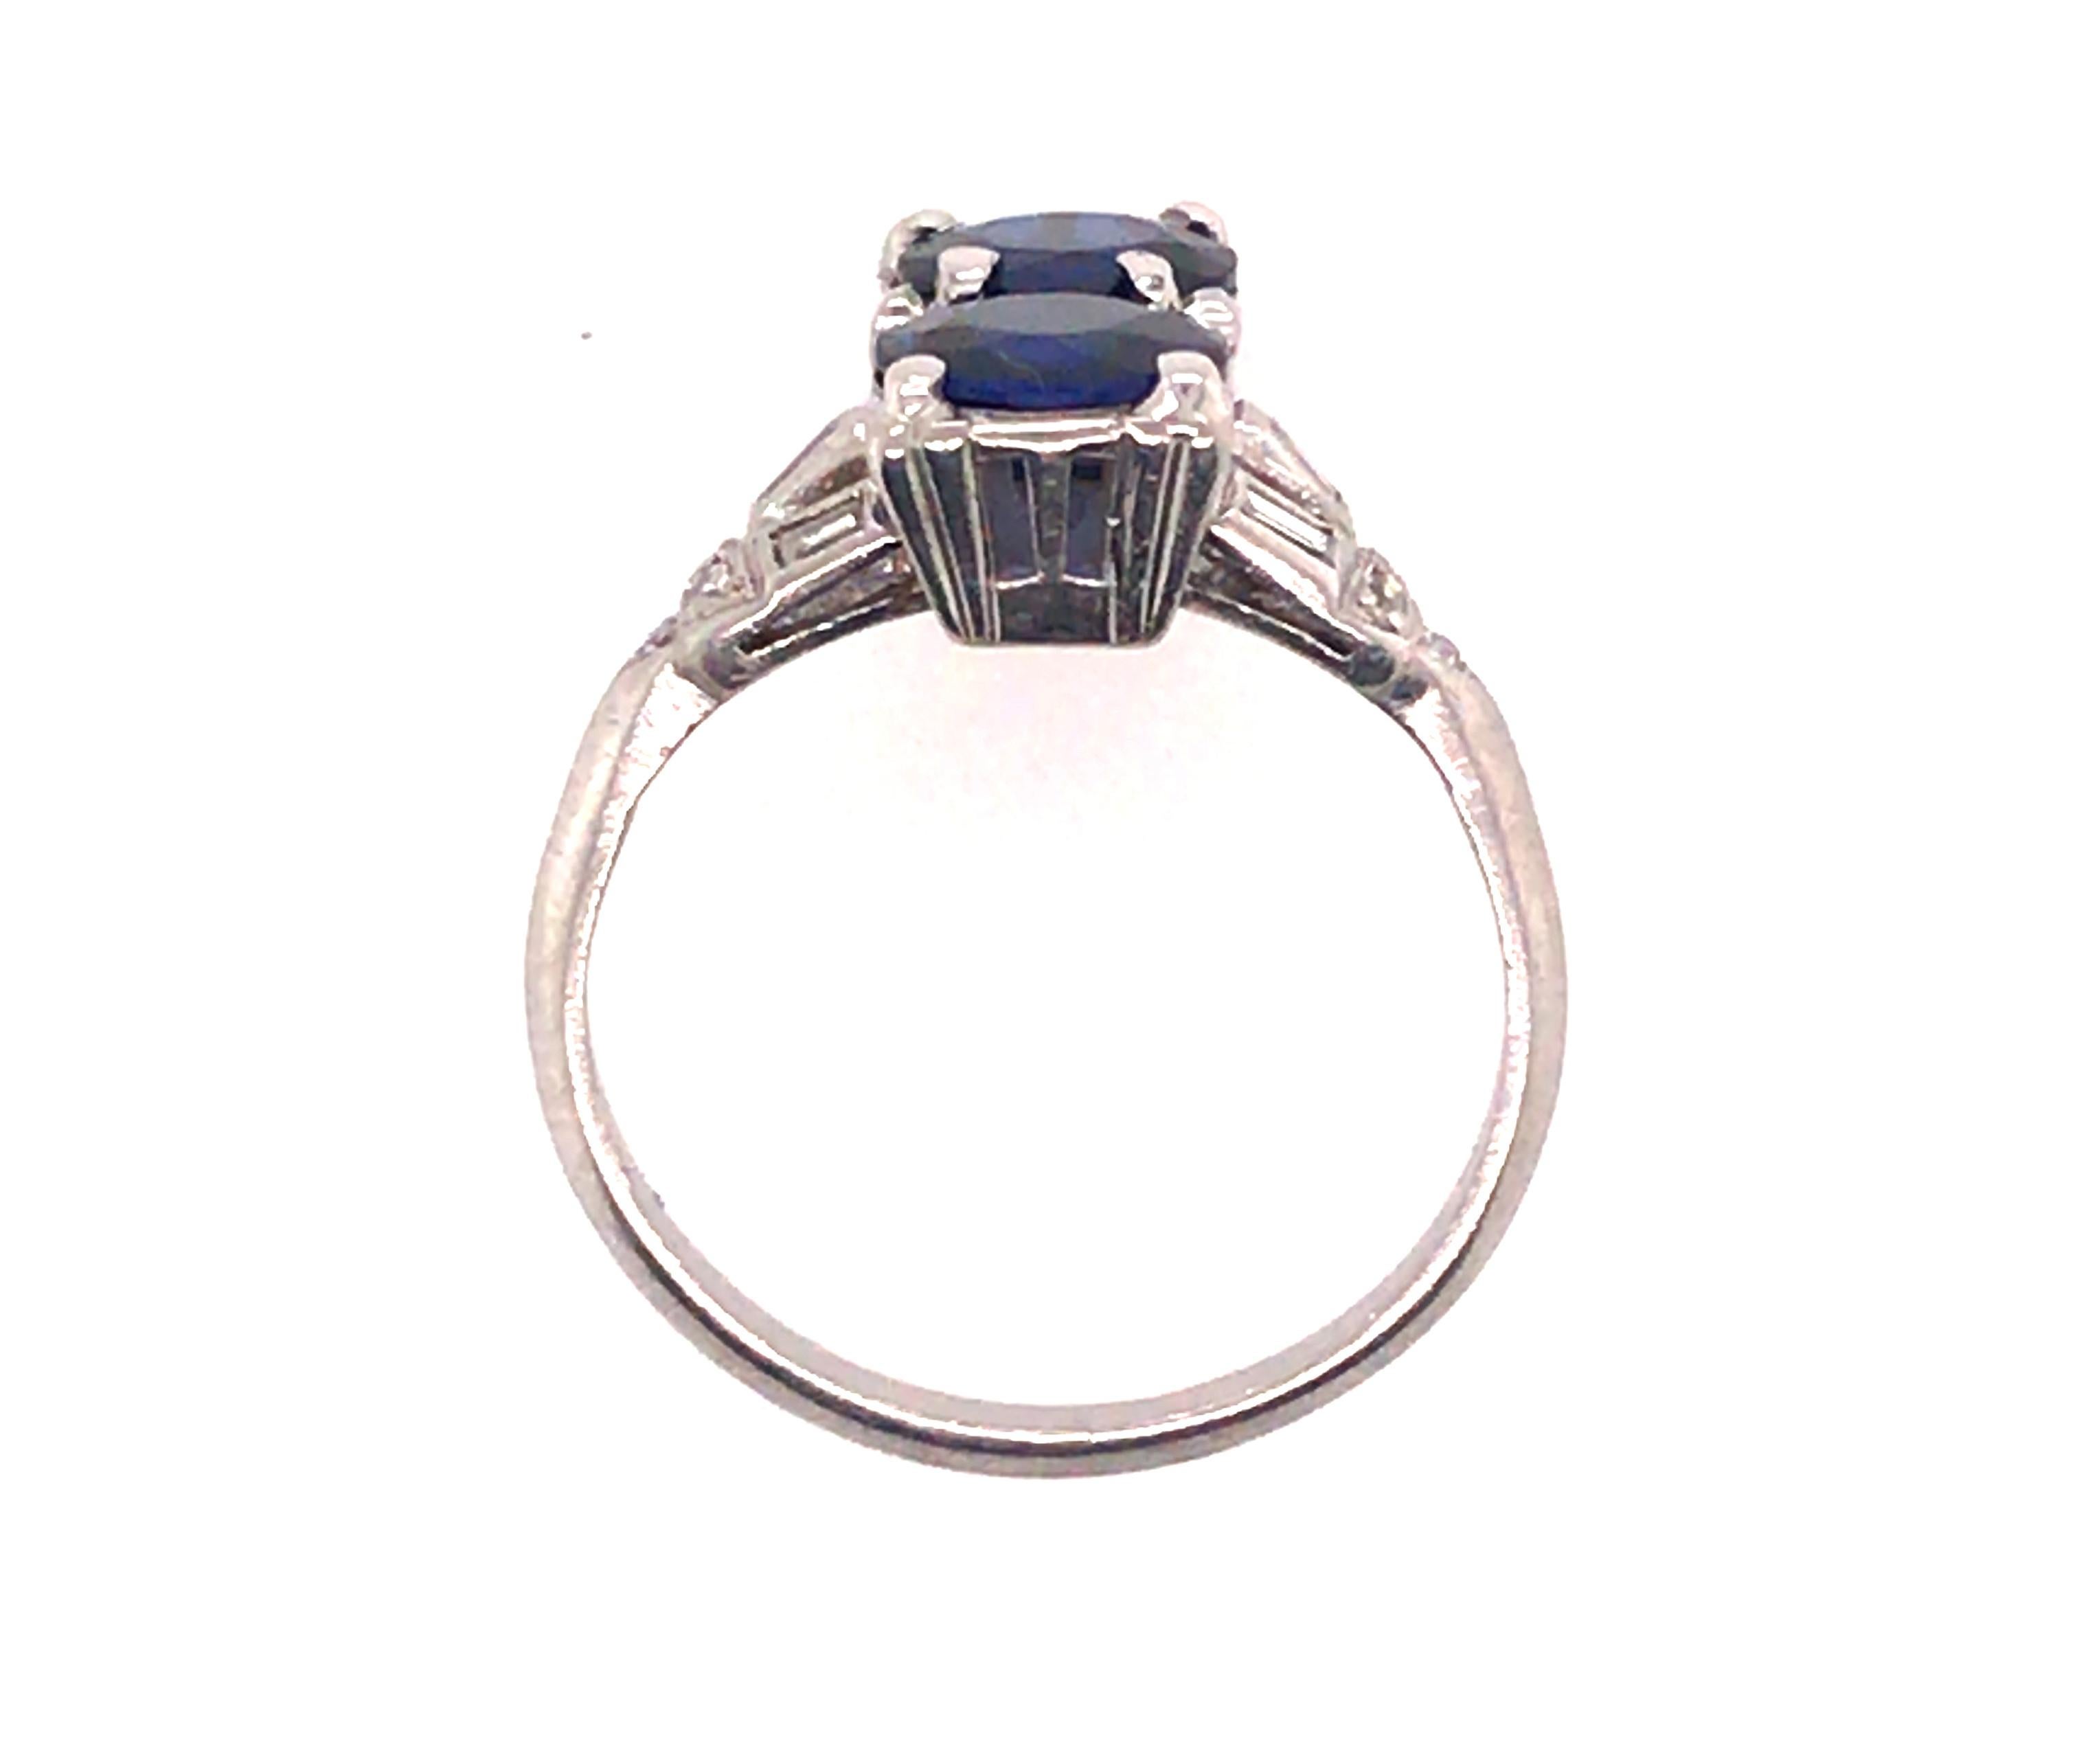 Genuine Original Art Deco Antique from 1920's Vintage 2 Stone Sapphire Diamond Ring 2.71ct Platinum


Featuring 2 Brilliant Bold Natural Blue Sapphires 

Genuine Antique Single Cut and Baguette Diamonds

100% Natural Sapphires &